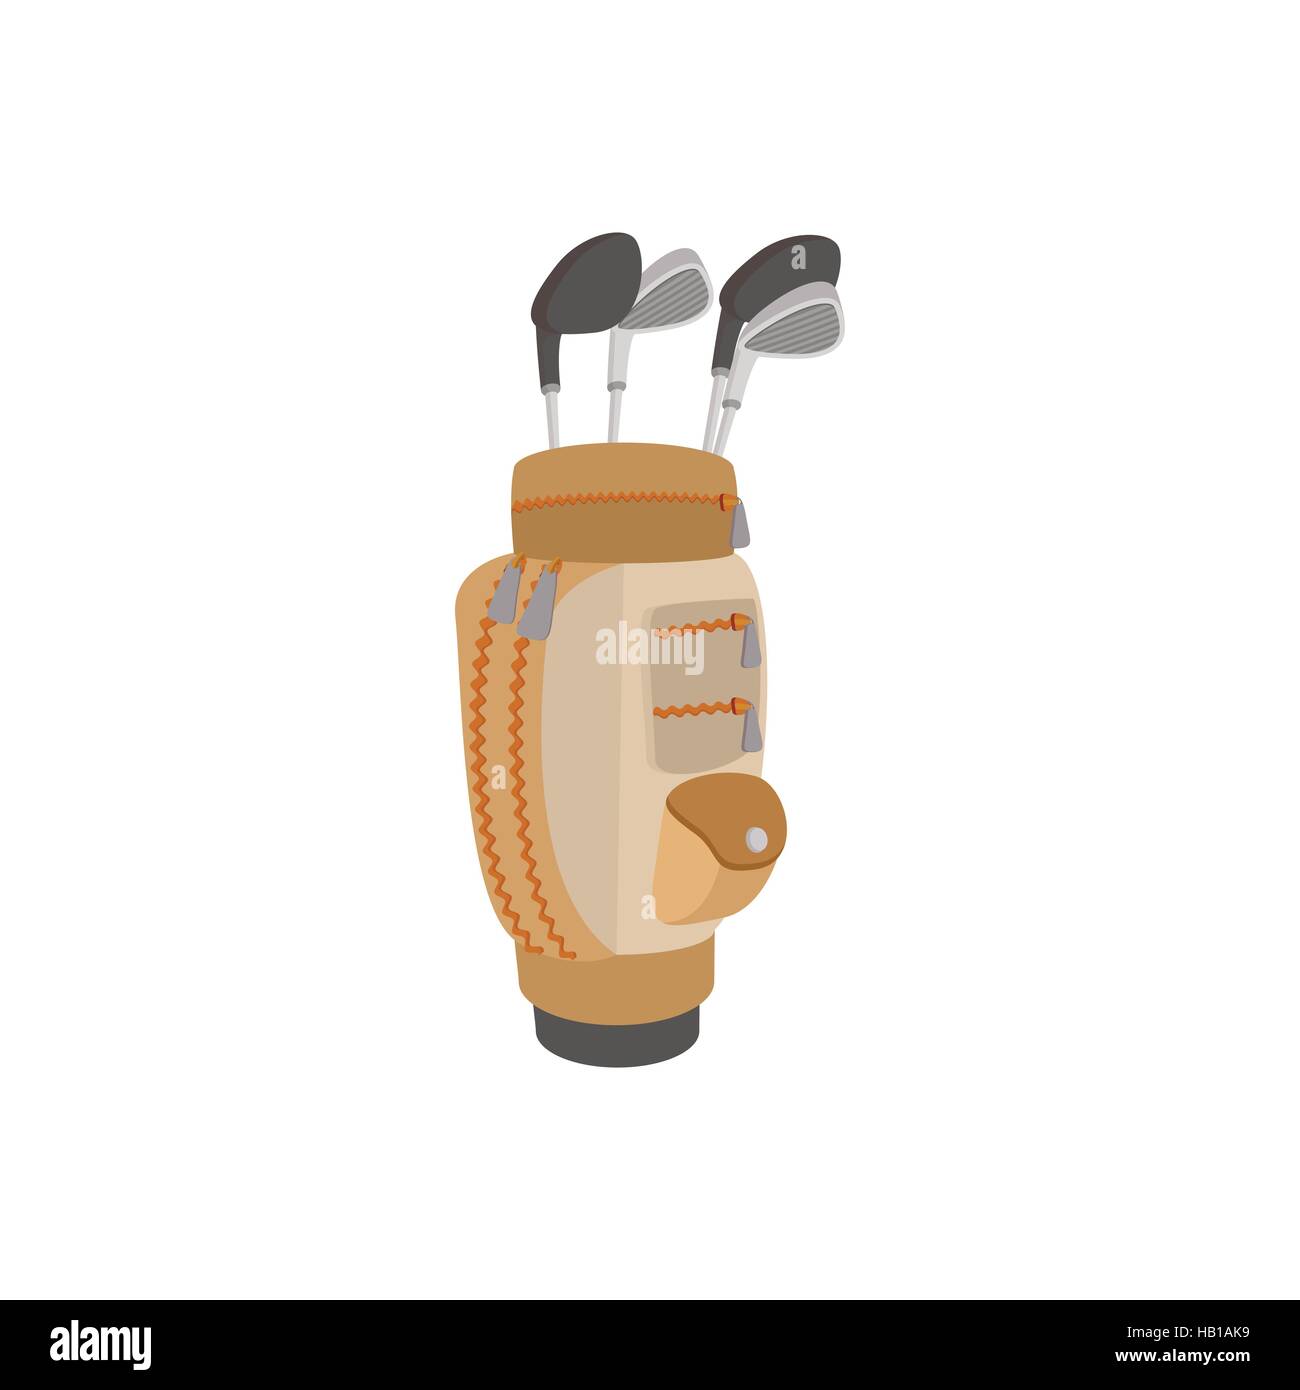 Golf clubs in a brown bag cartoon icon Stock Vector